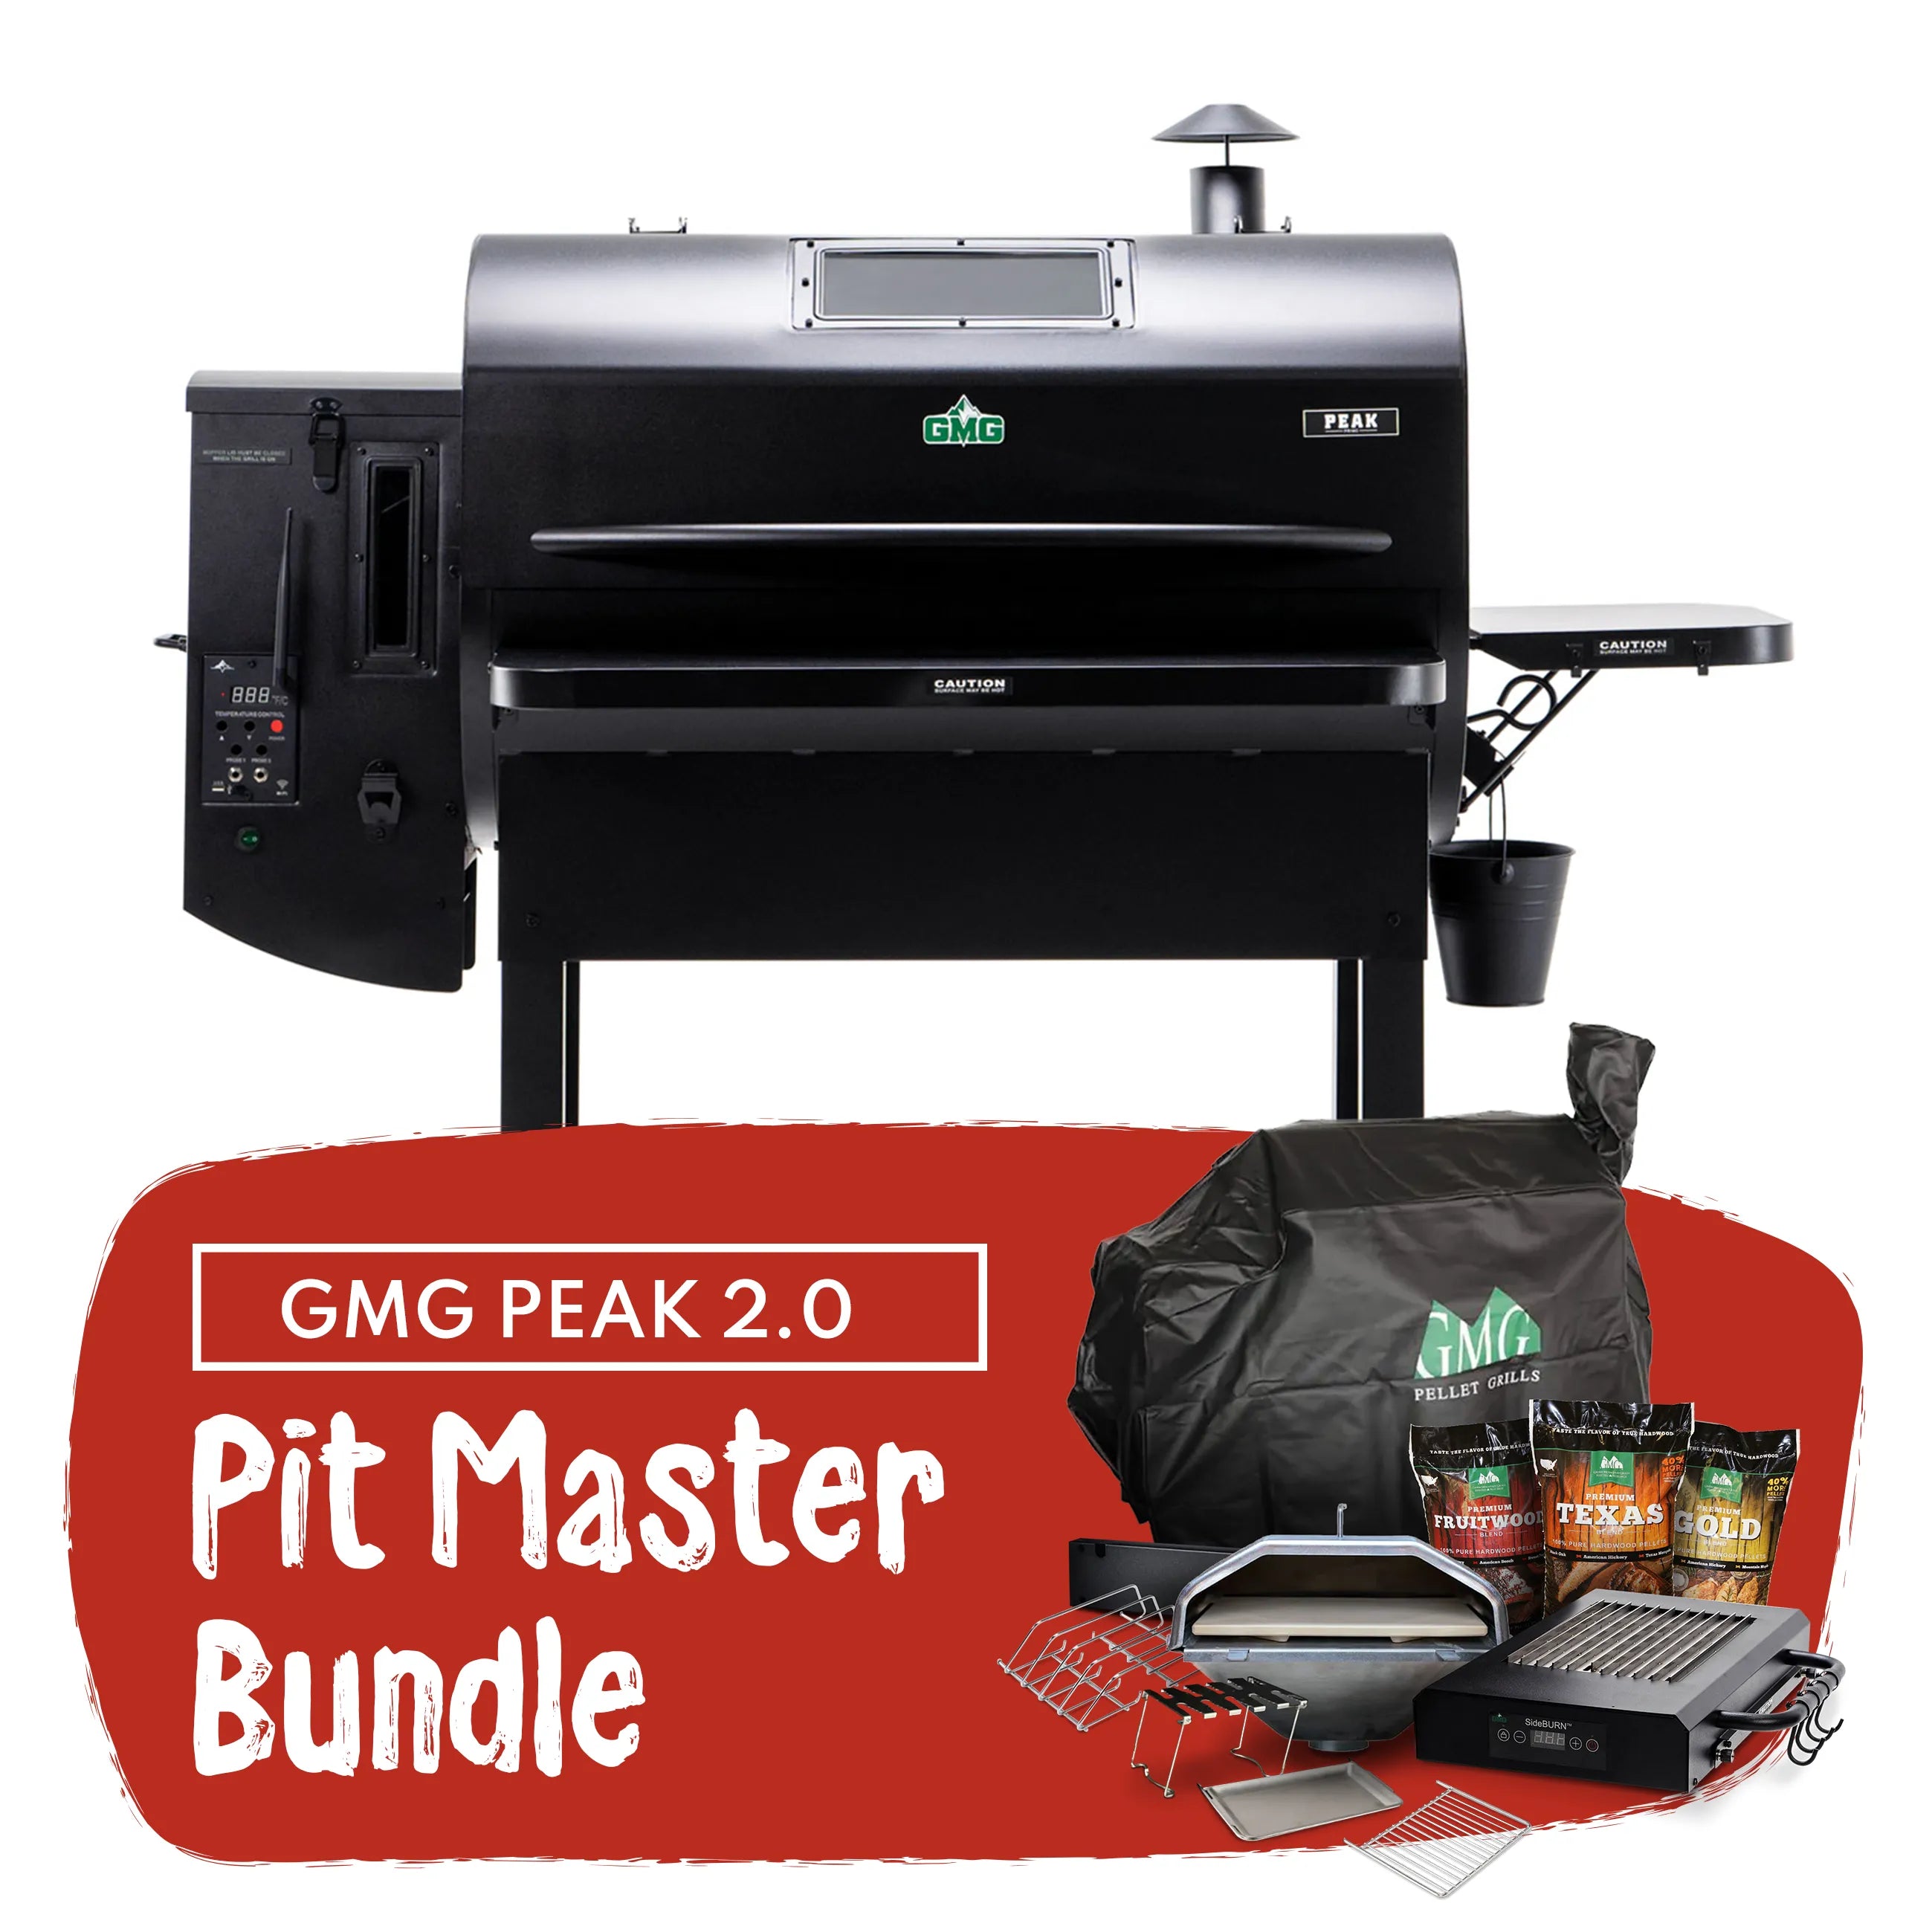 GMG Peak Prime 2.0 - Pit Master Bundle